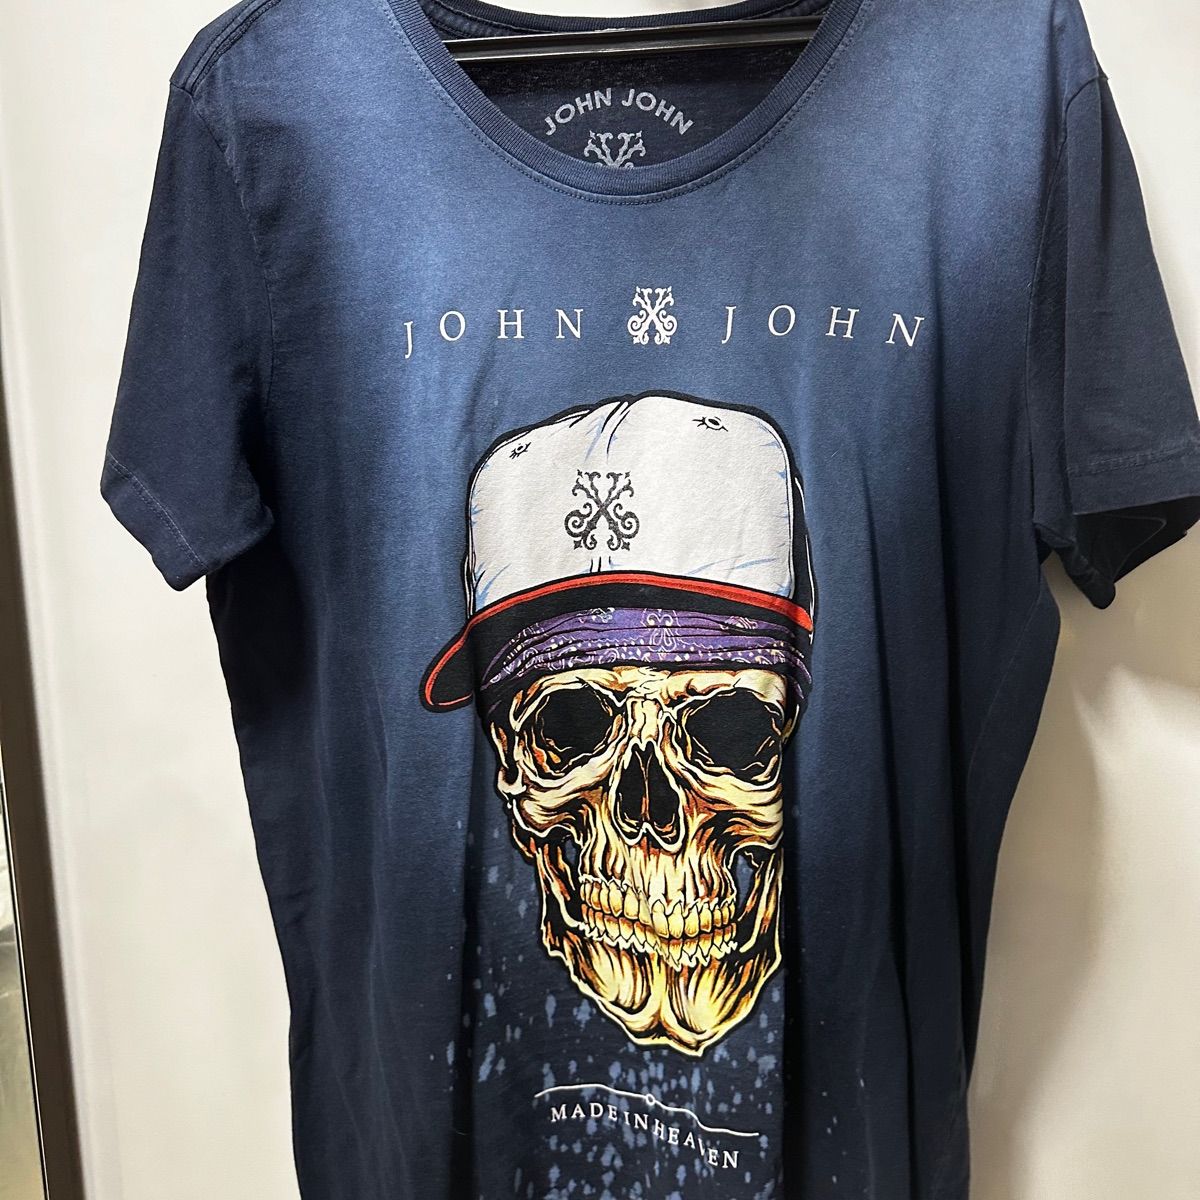 Camiseta Camuflada Made In Heaven John John Masculina 42.54.5027